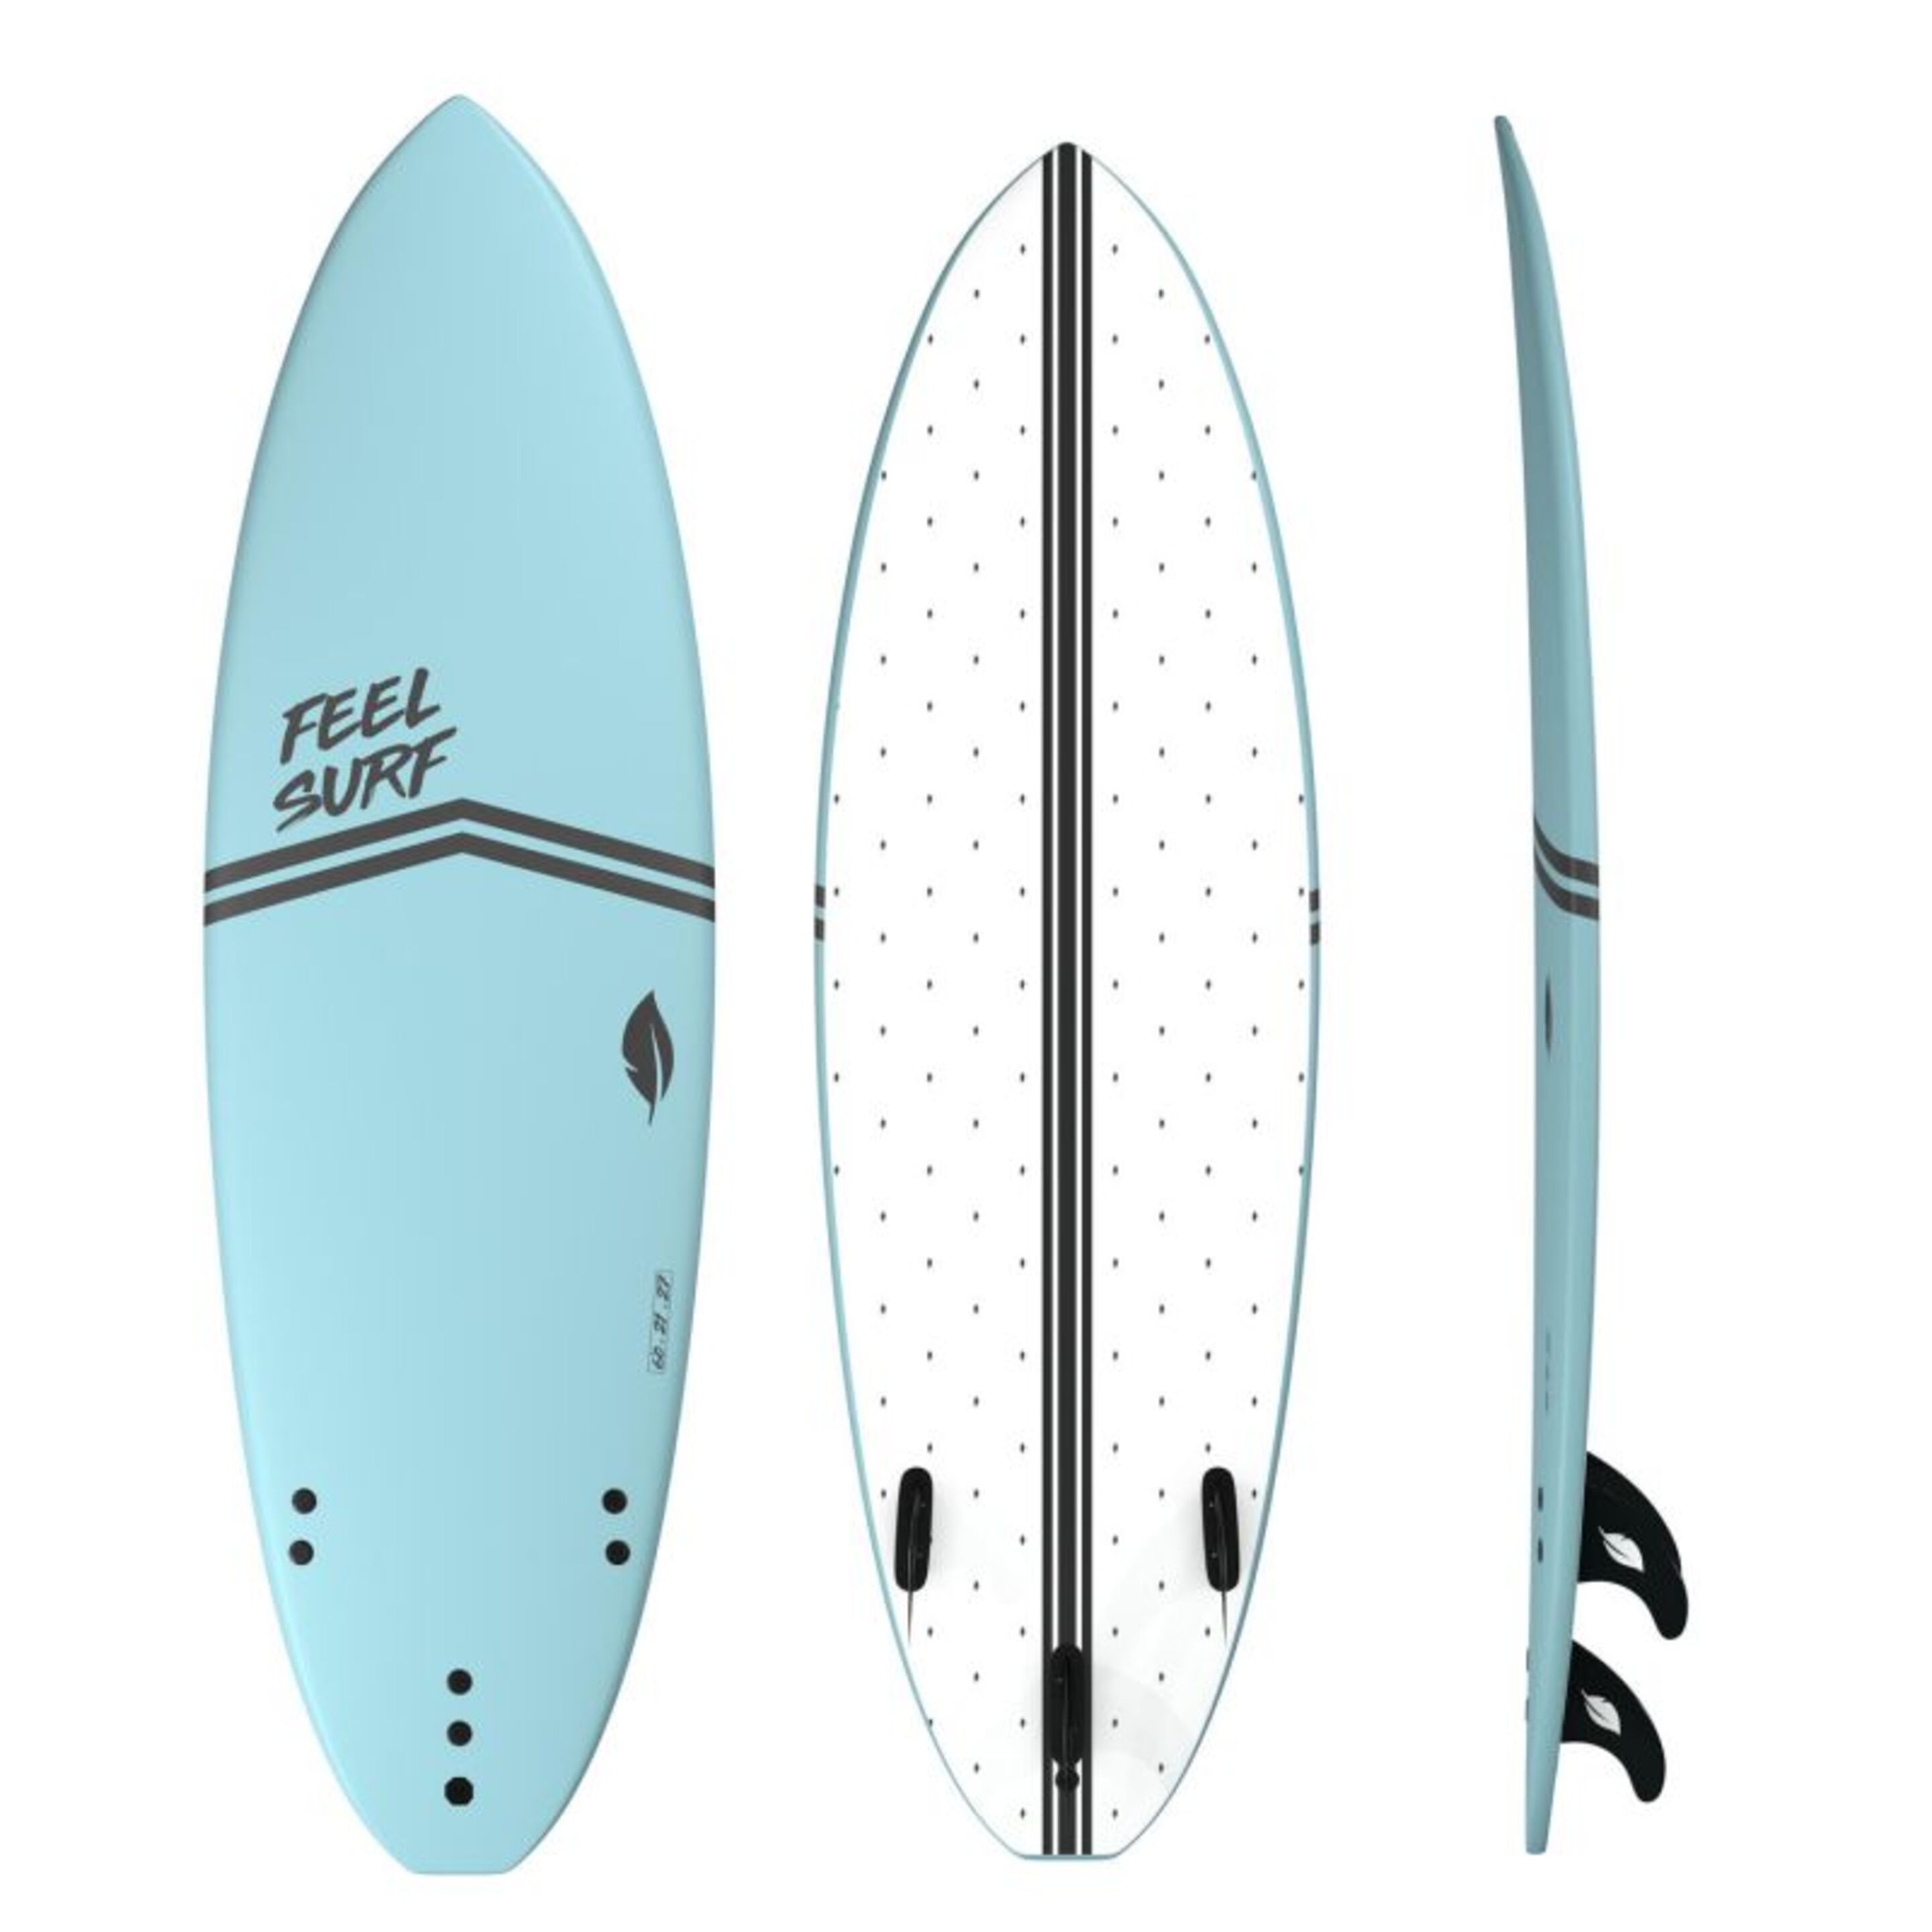 Tabla De Surf Espuma 6' Feel Surf - 6' X 21' X 2'' 3/4 - 40,8l - azul - 